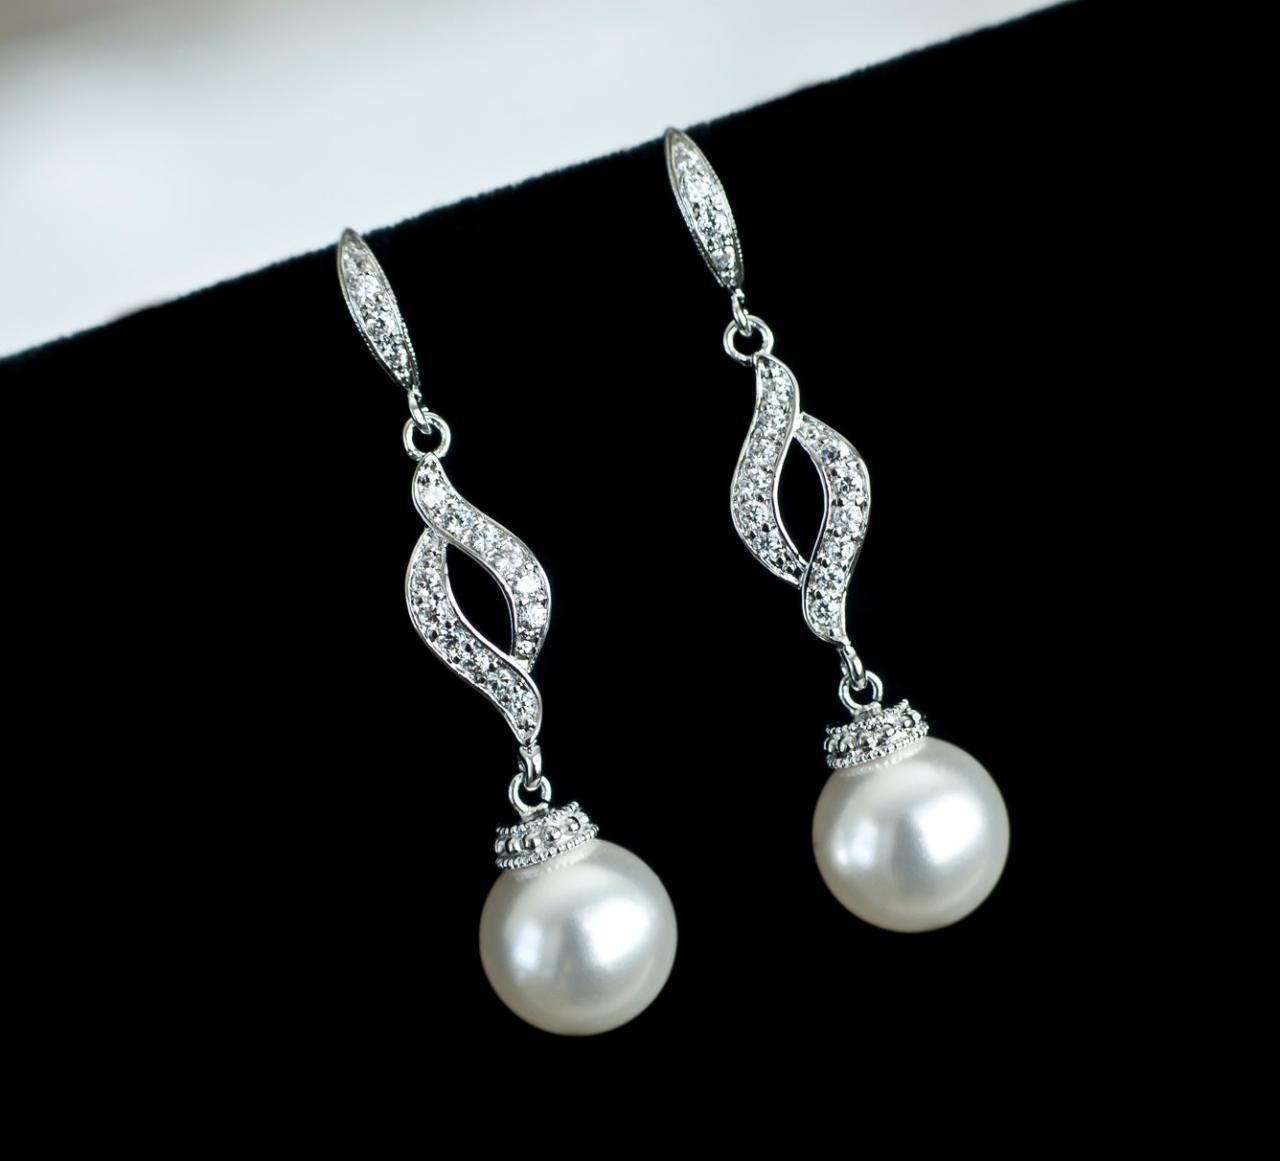 Bridal Earrings, Bridal Pearl Earrings, Wedding Jewelry, White Or Ivory/cream Swarovski Pearls And Cubic Zirconia Connectors Earrings,